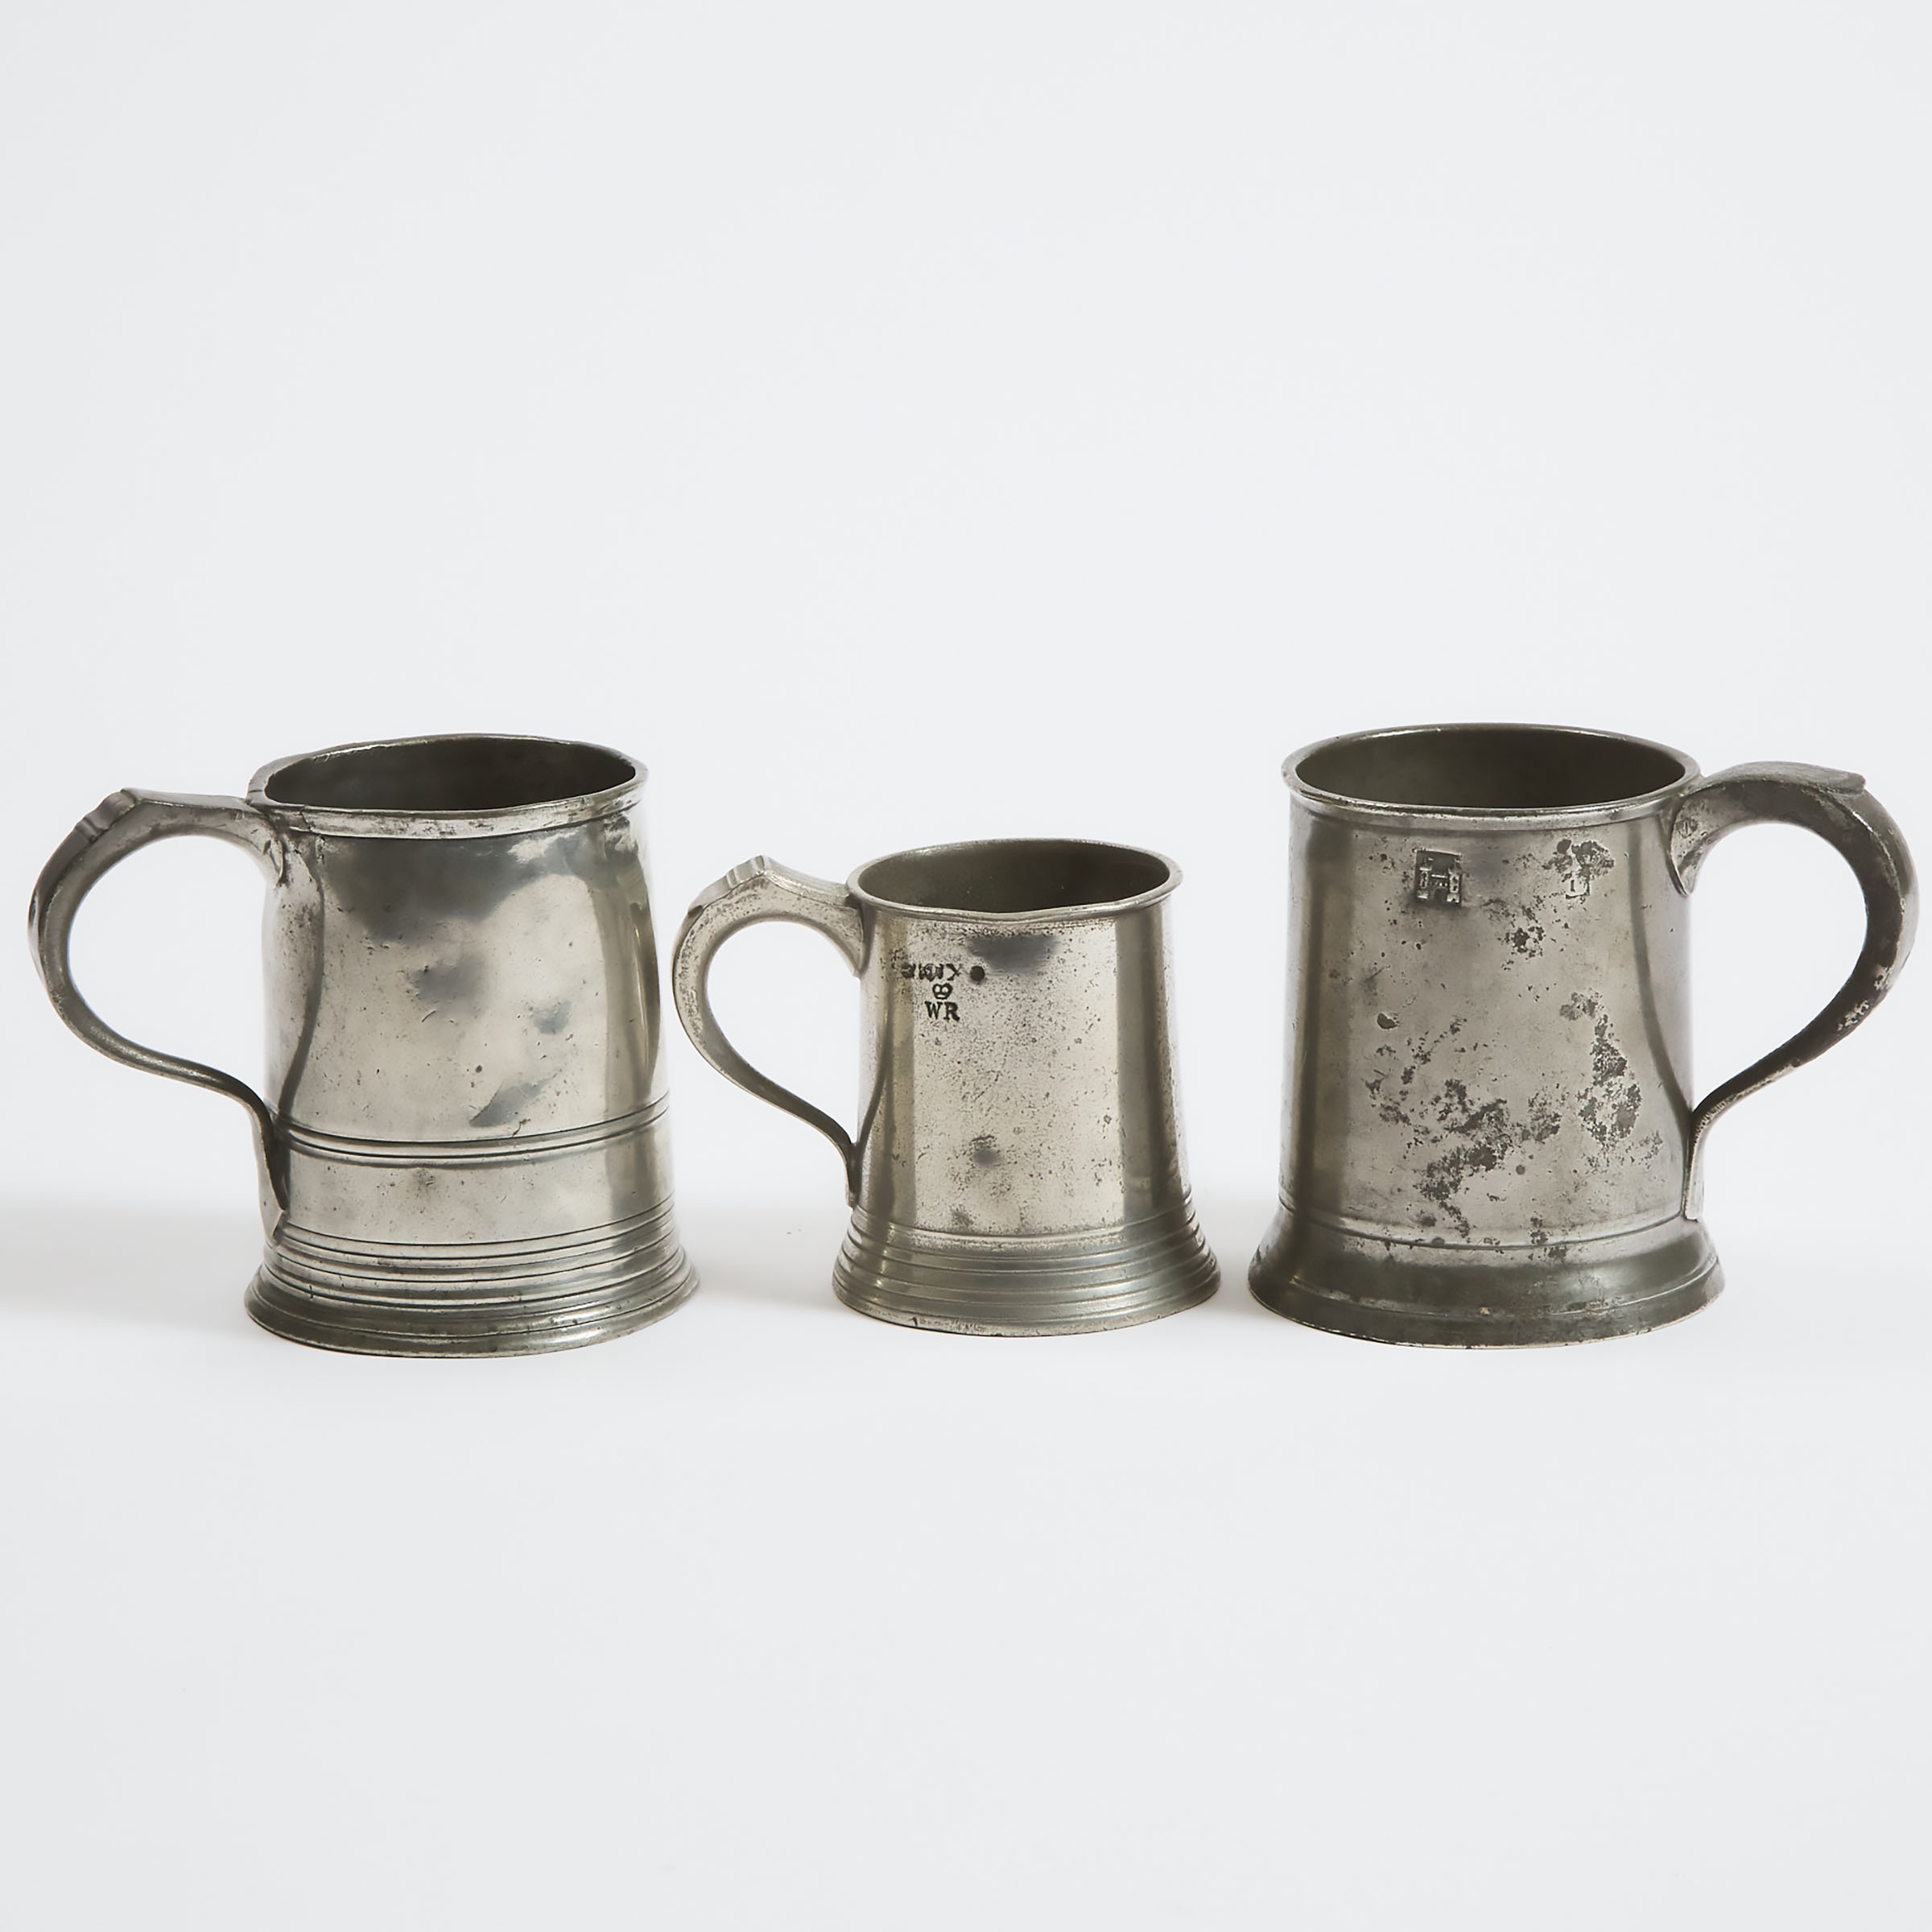 Three English Pewter Mugs, 18th and 19th centuries